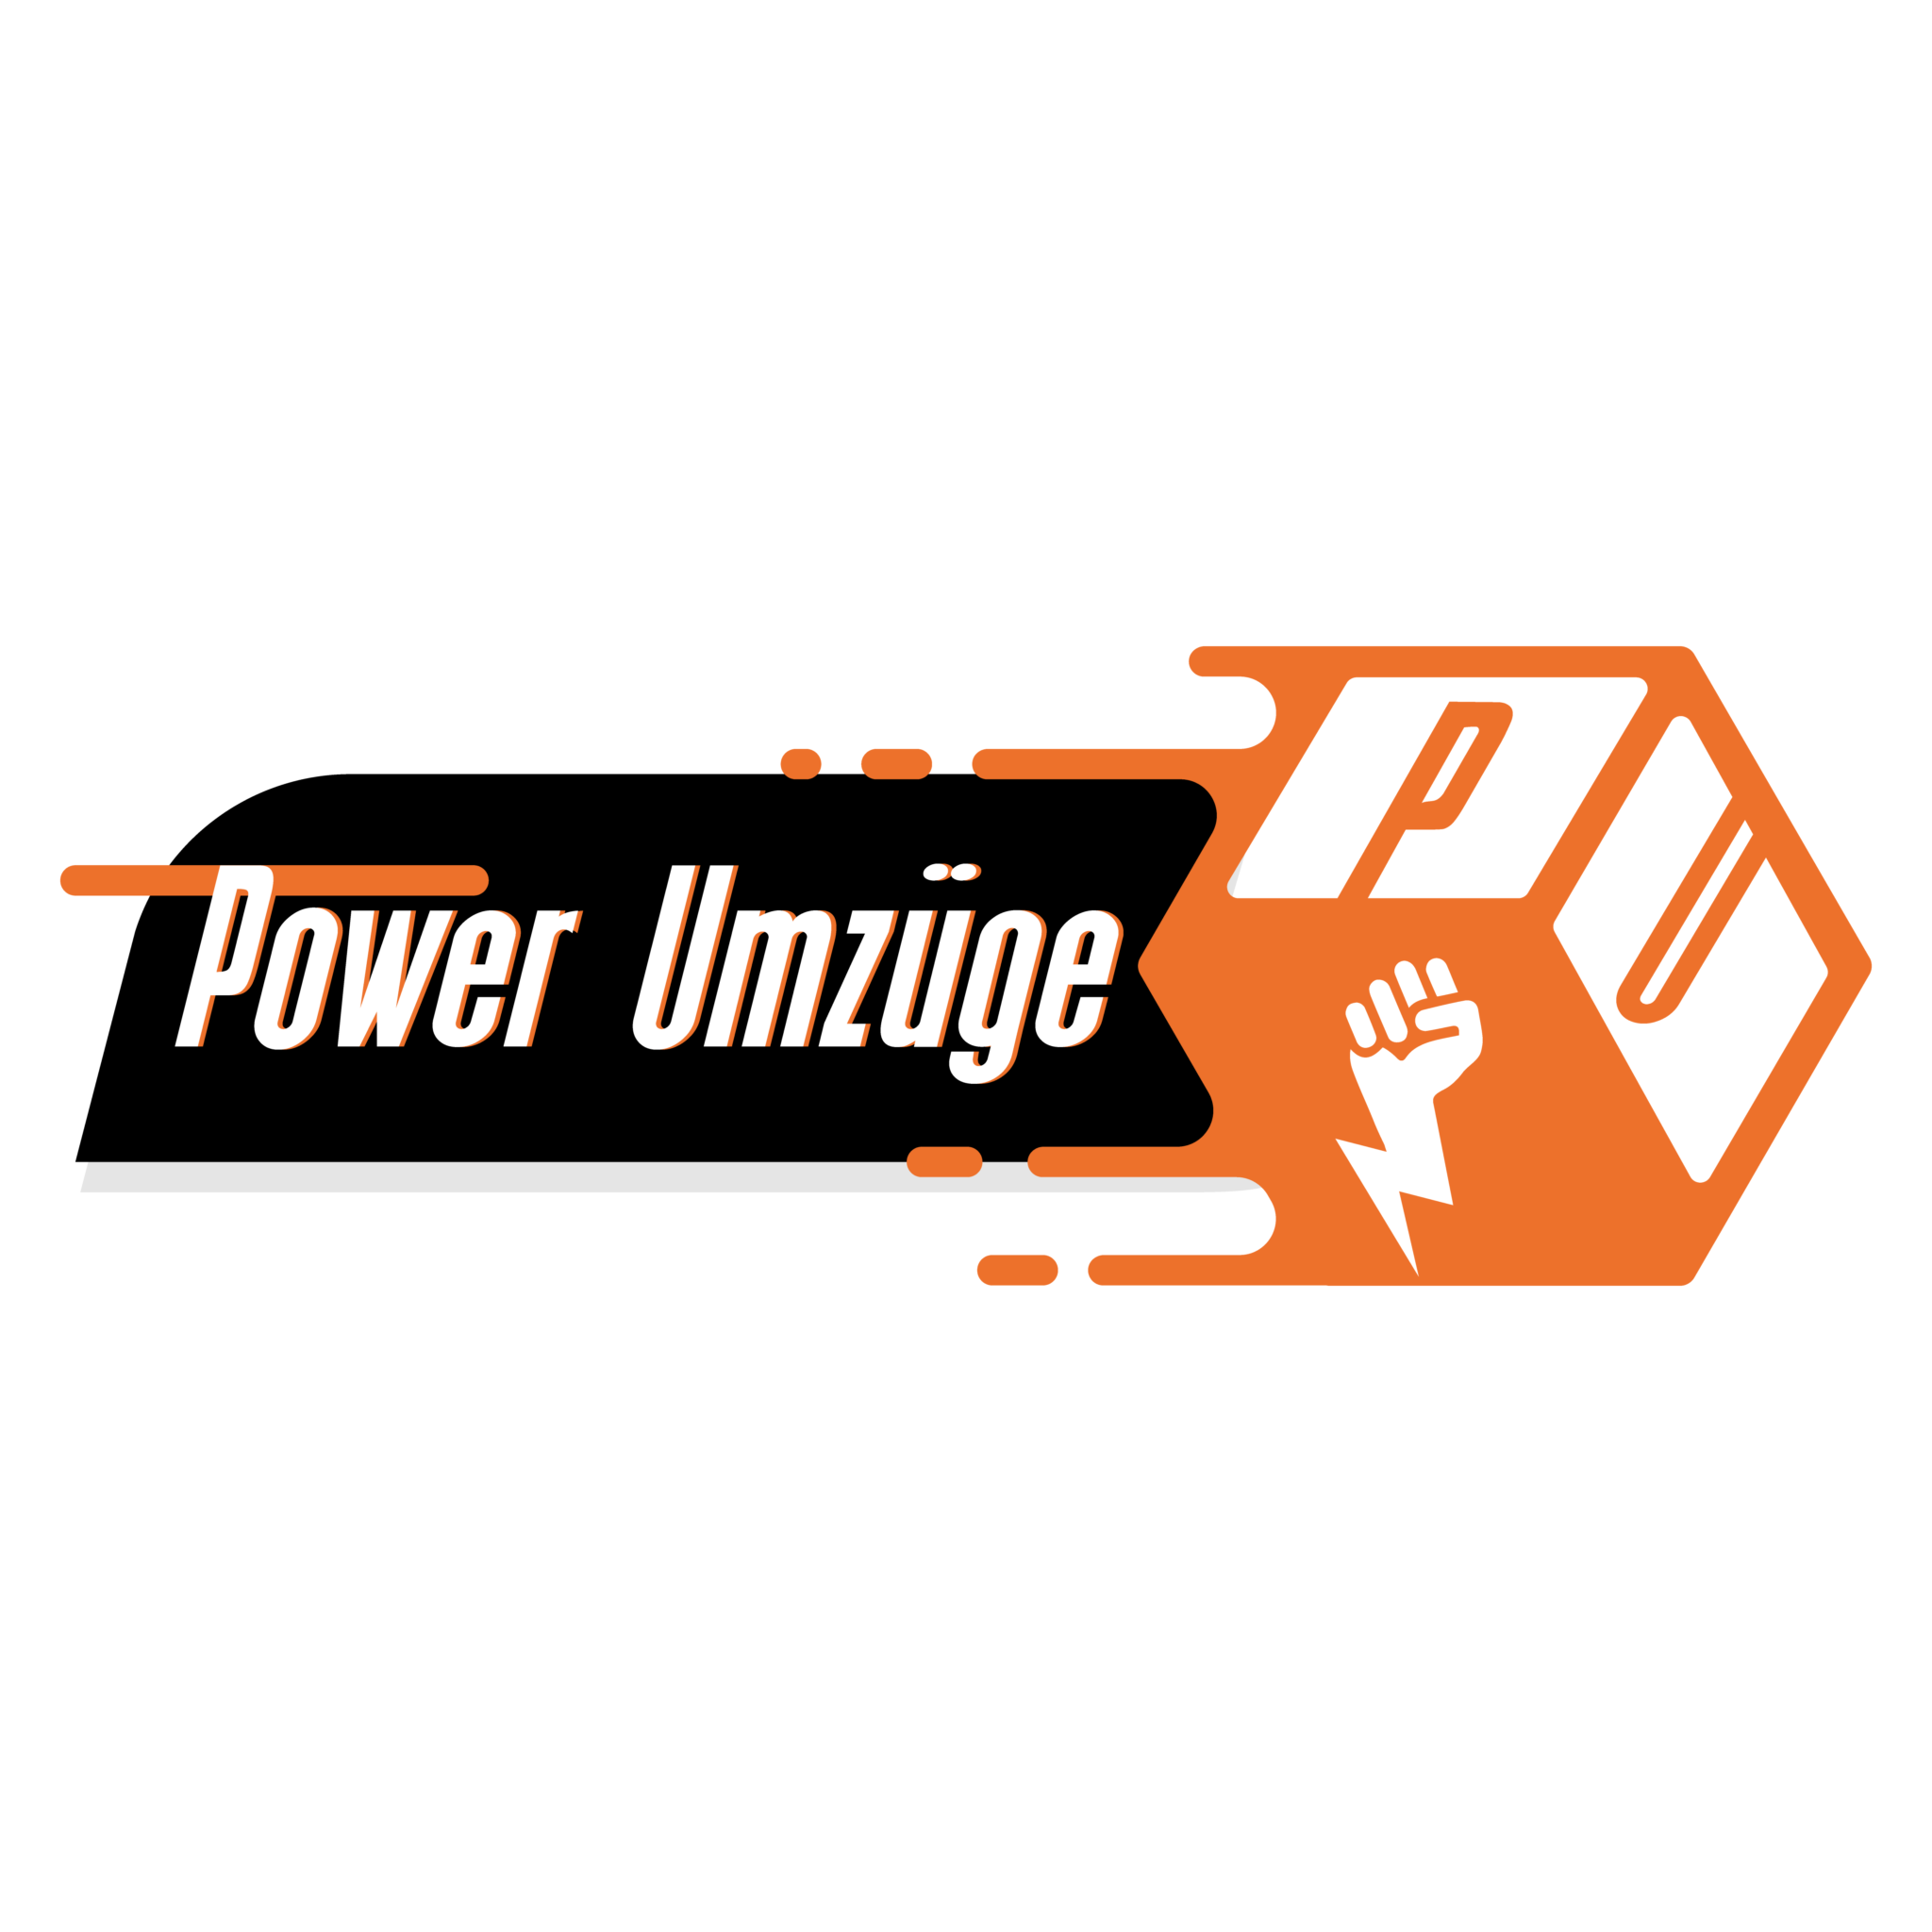 Power Umzüge in Hamburg - Logo